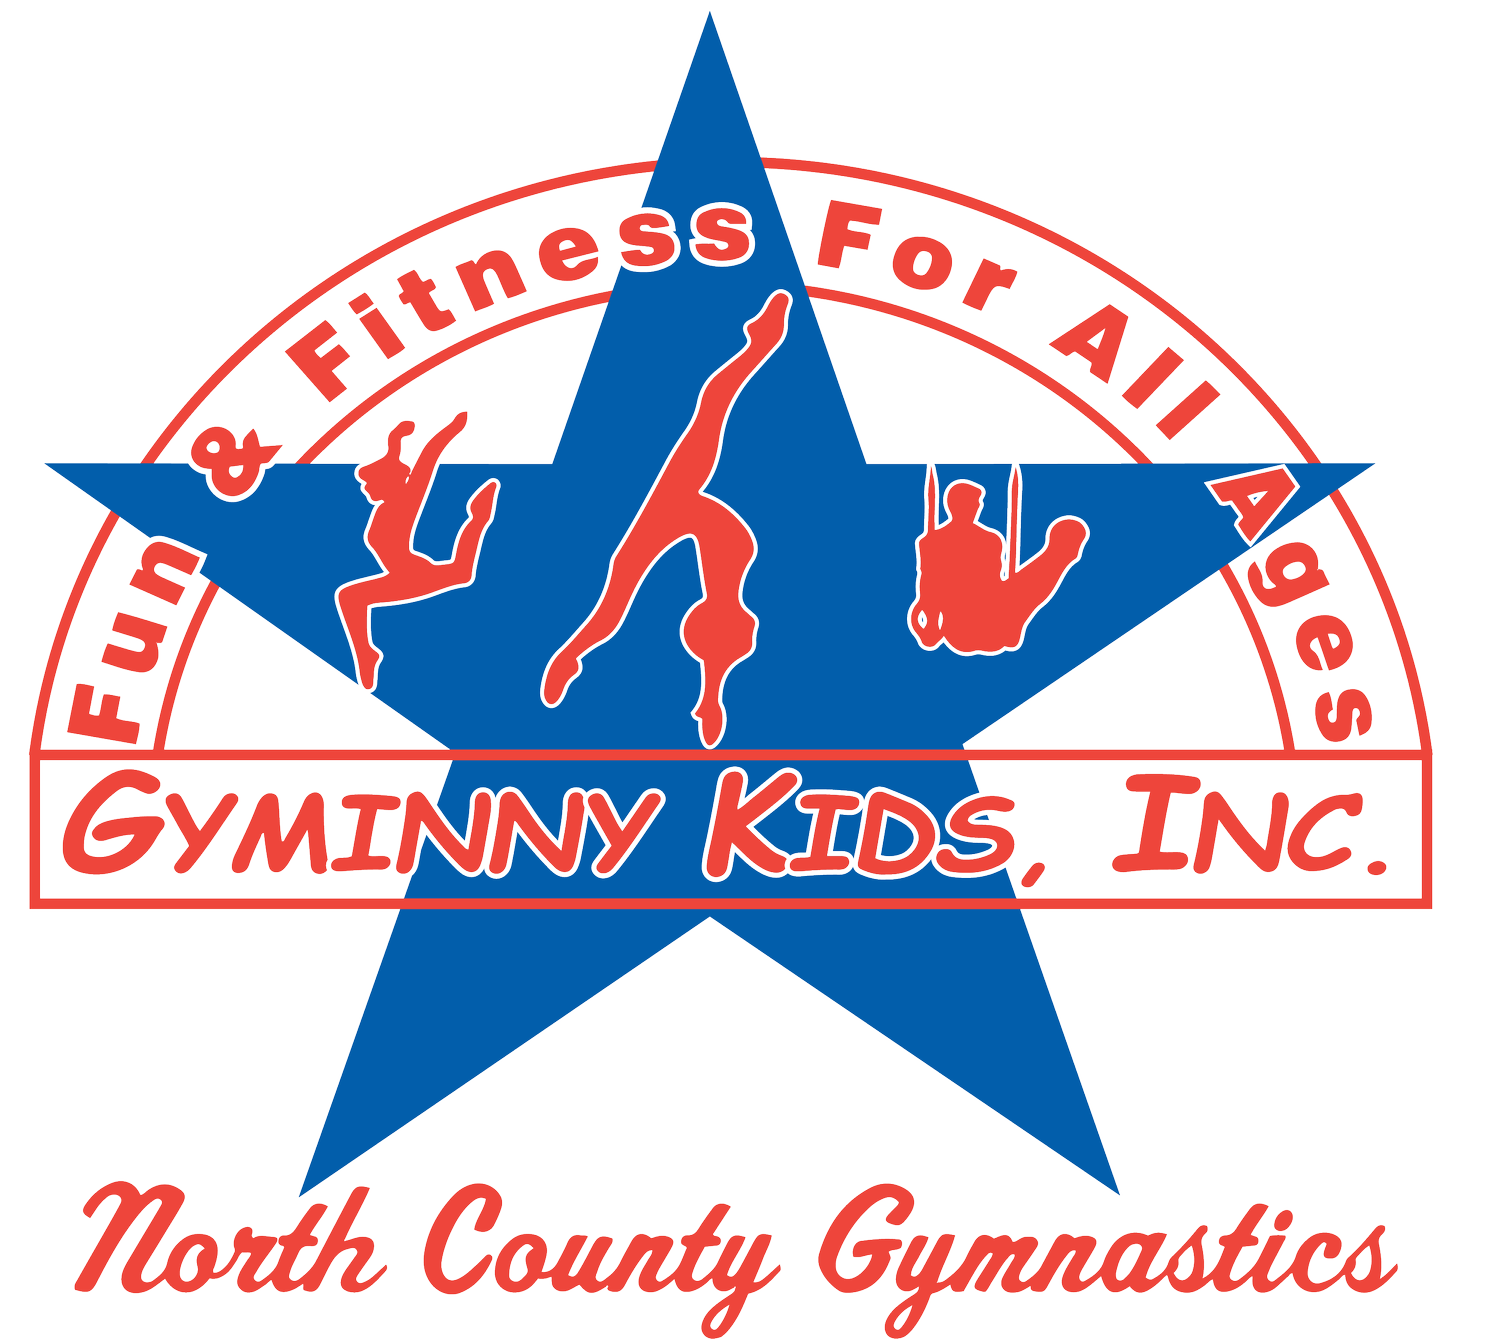 North County Gymnastics &amp; The Gyminny Kids